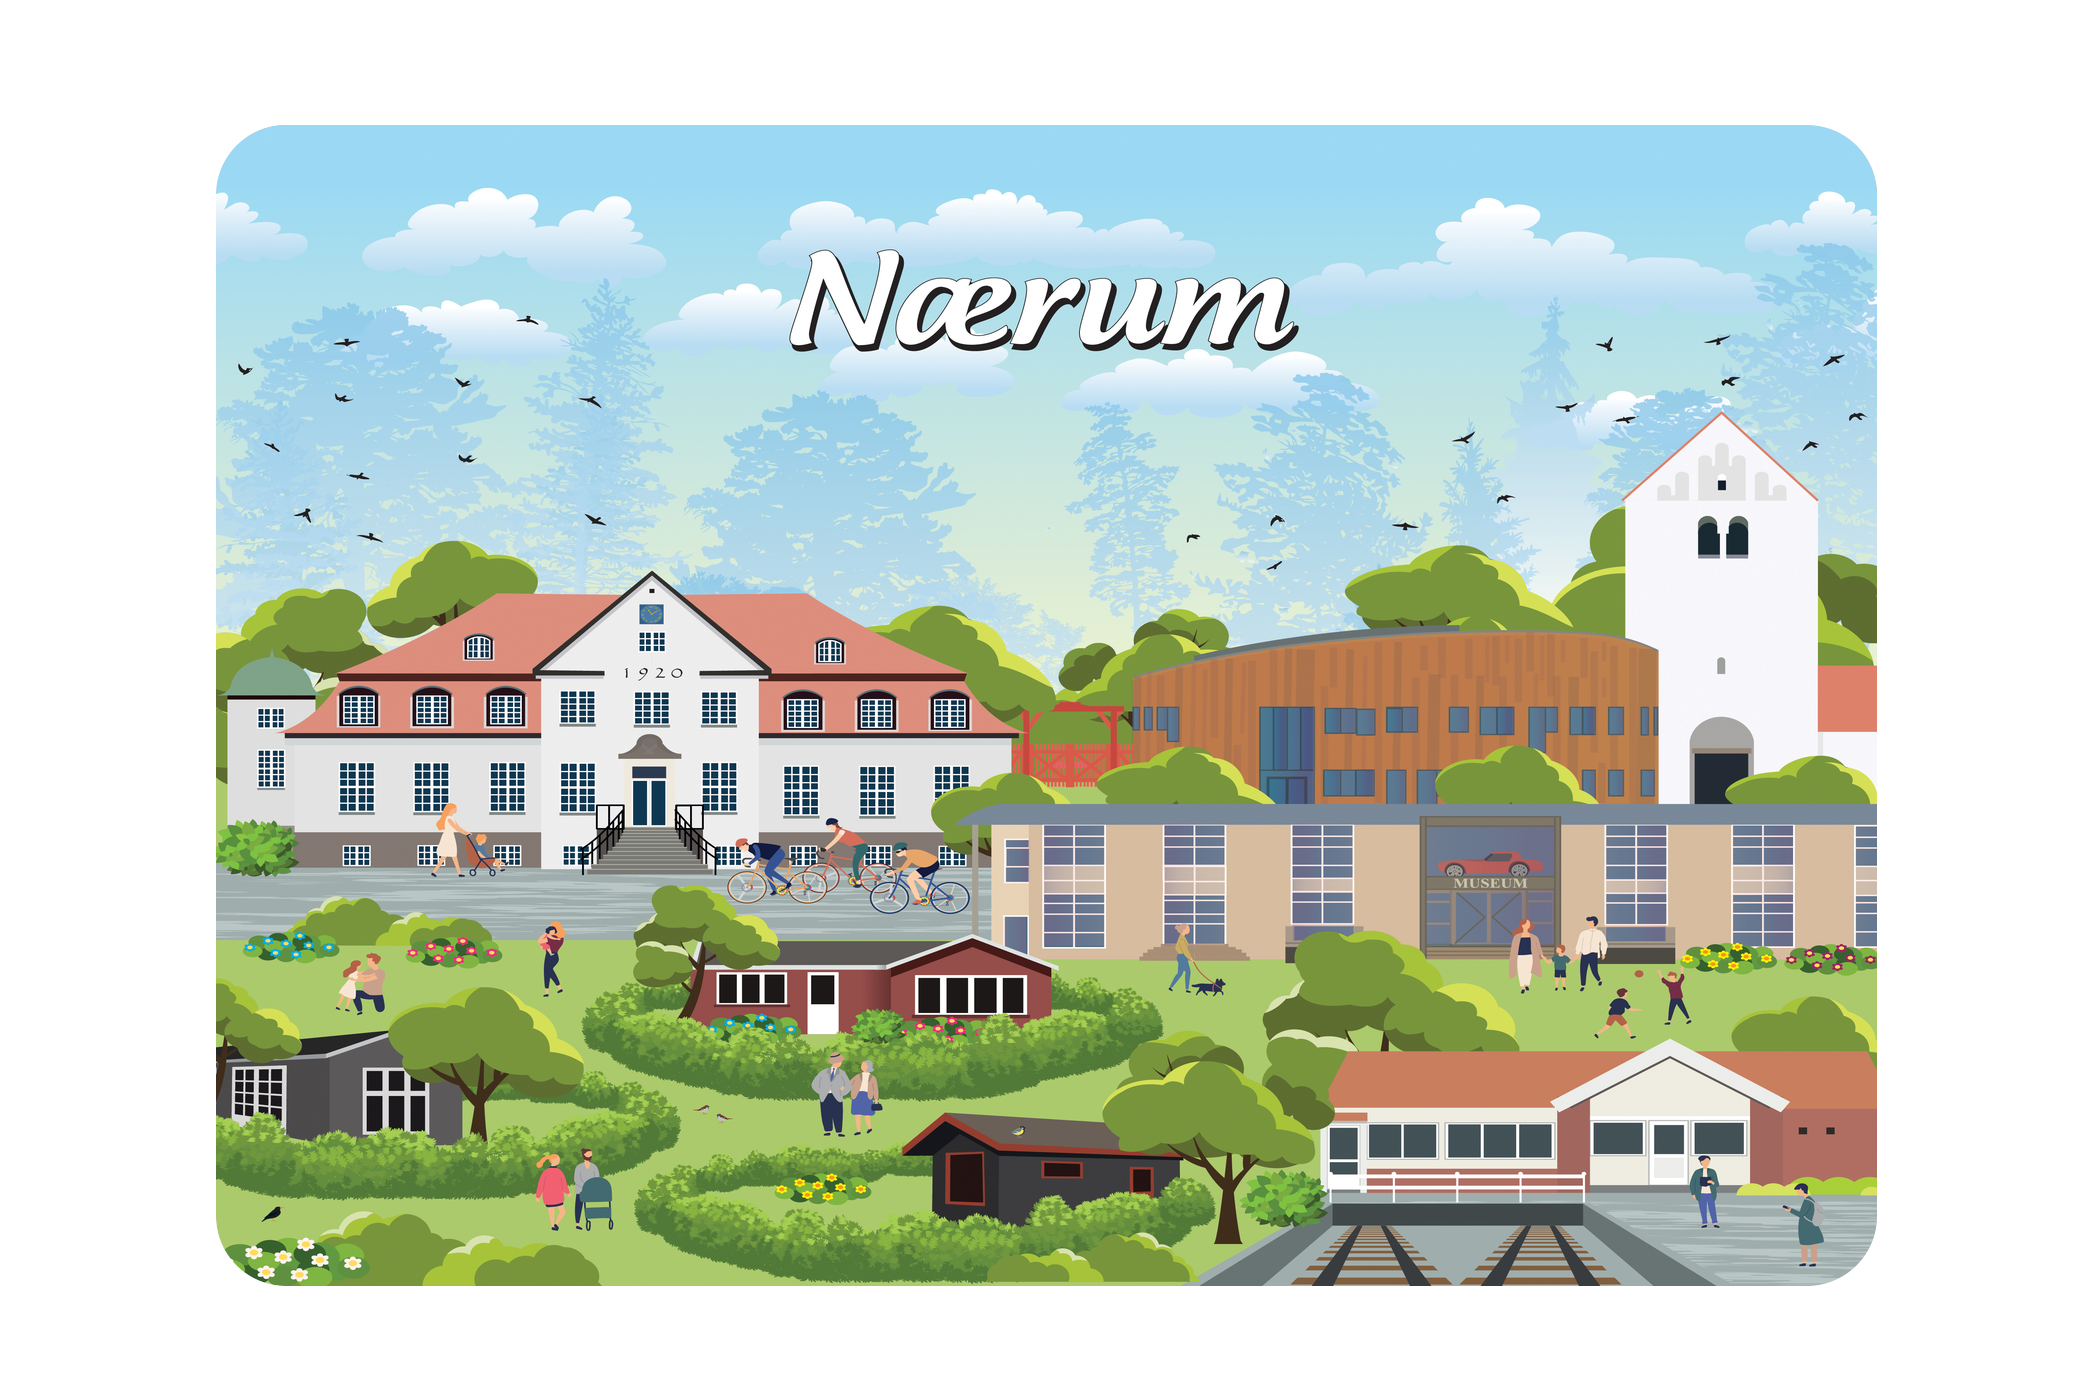 Nærum - Bykoncept